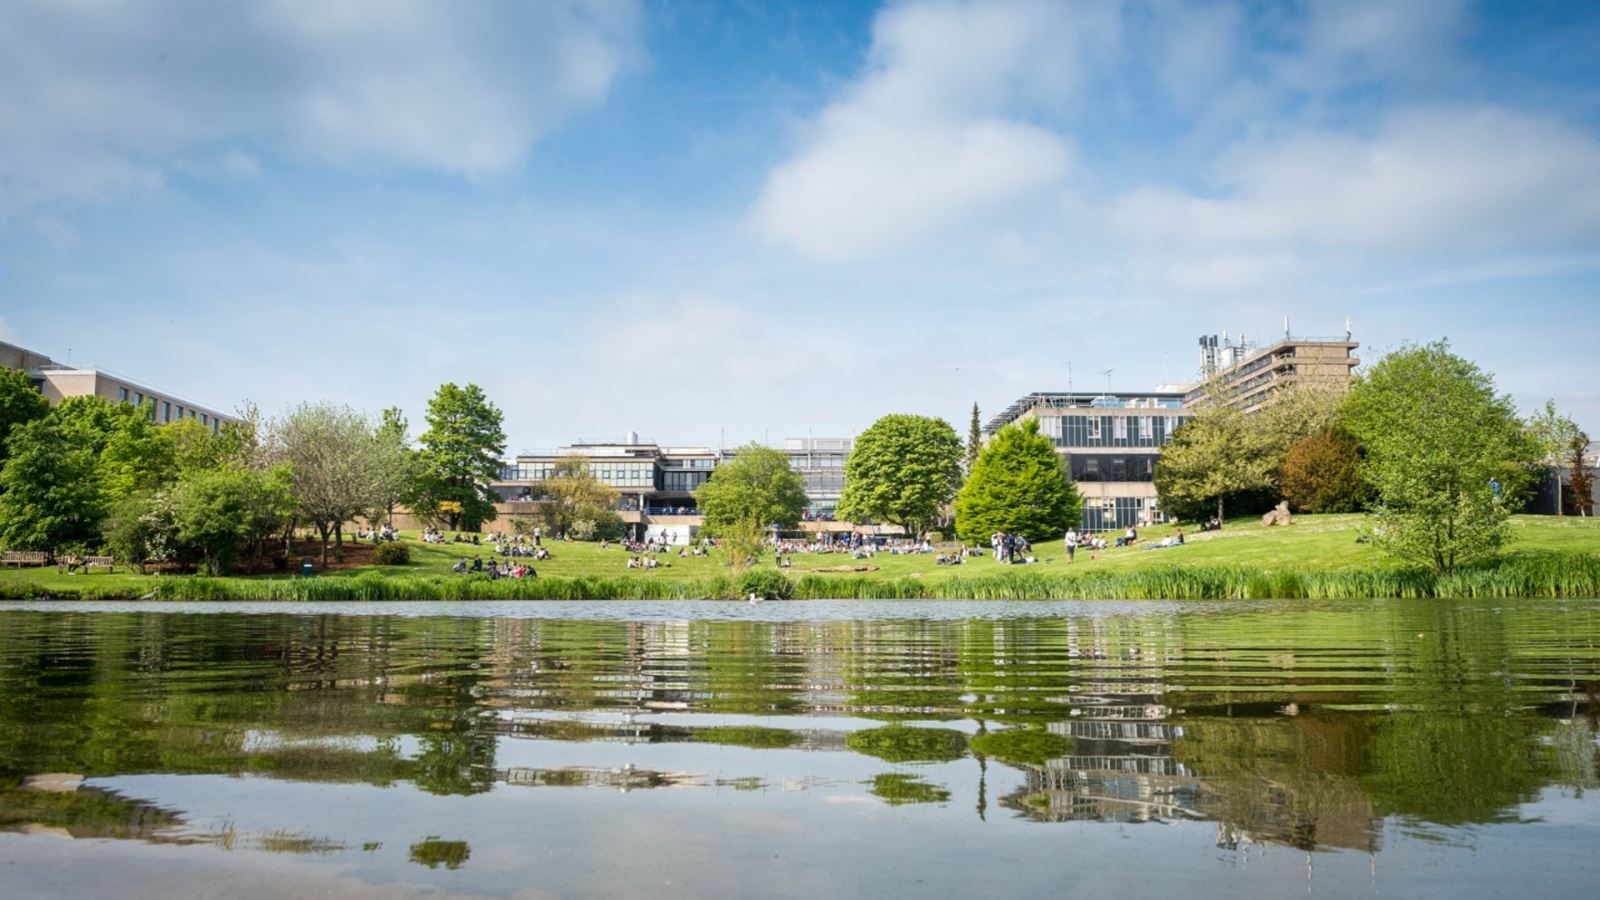 Lake and green space at University of Bath